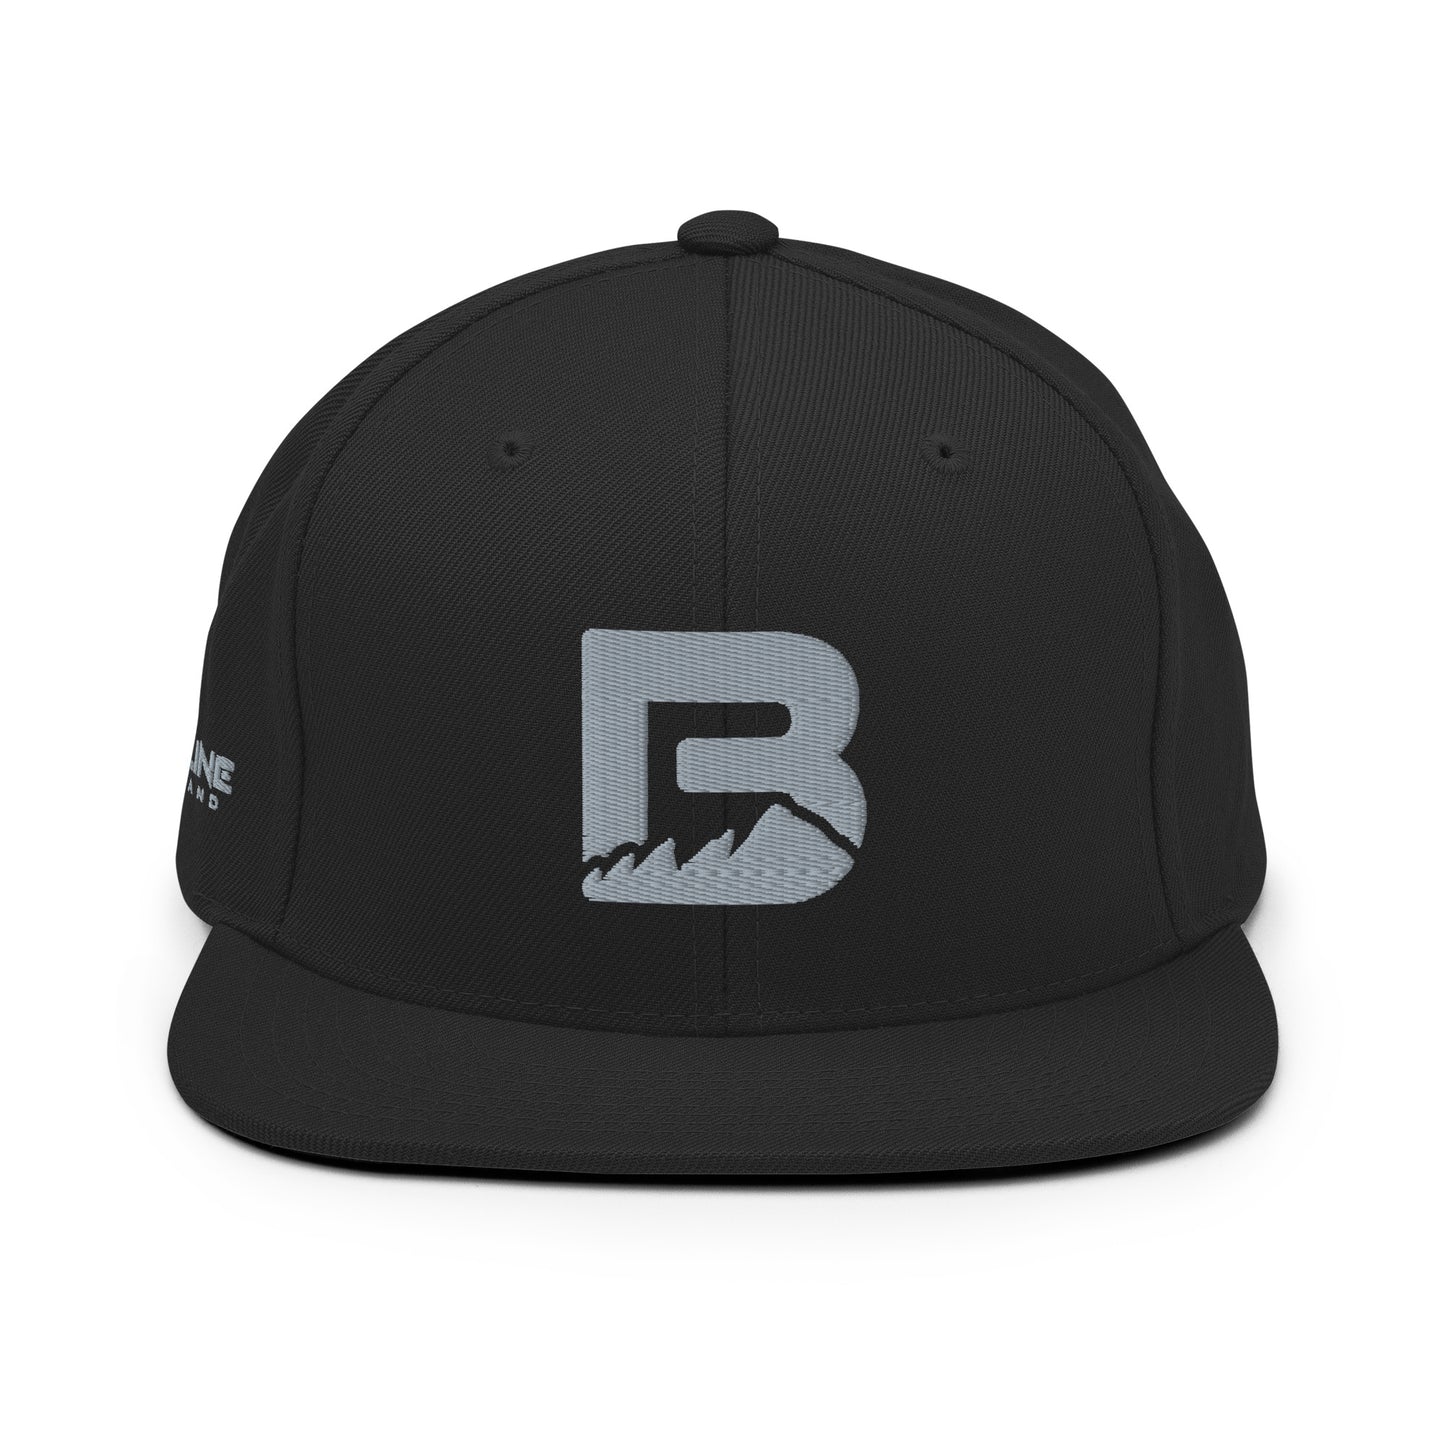 Baseline Overland "B" Snapback Hat